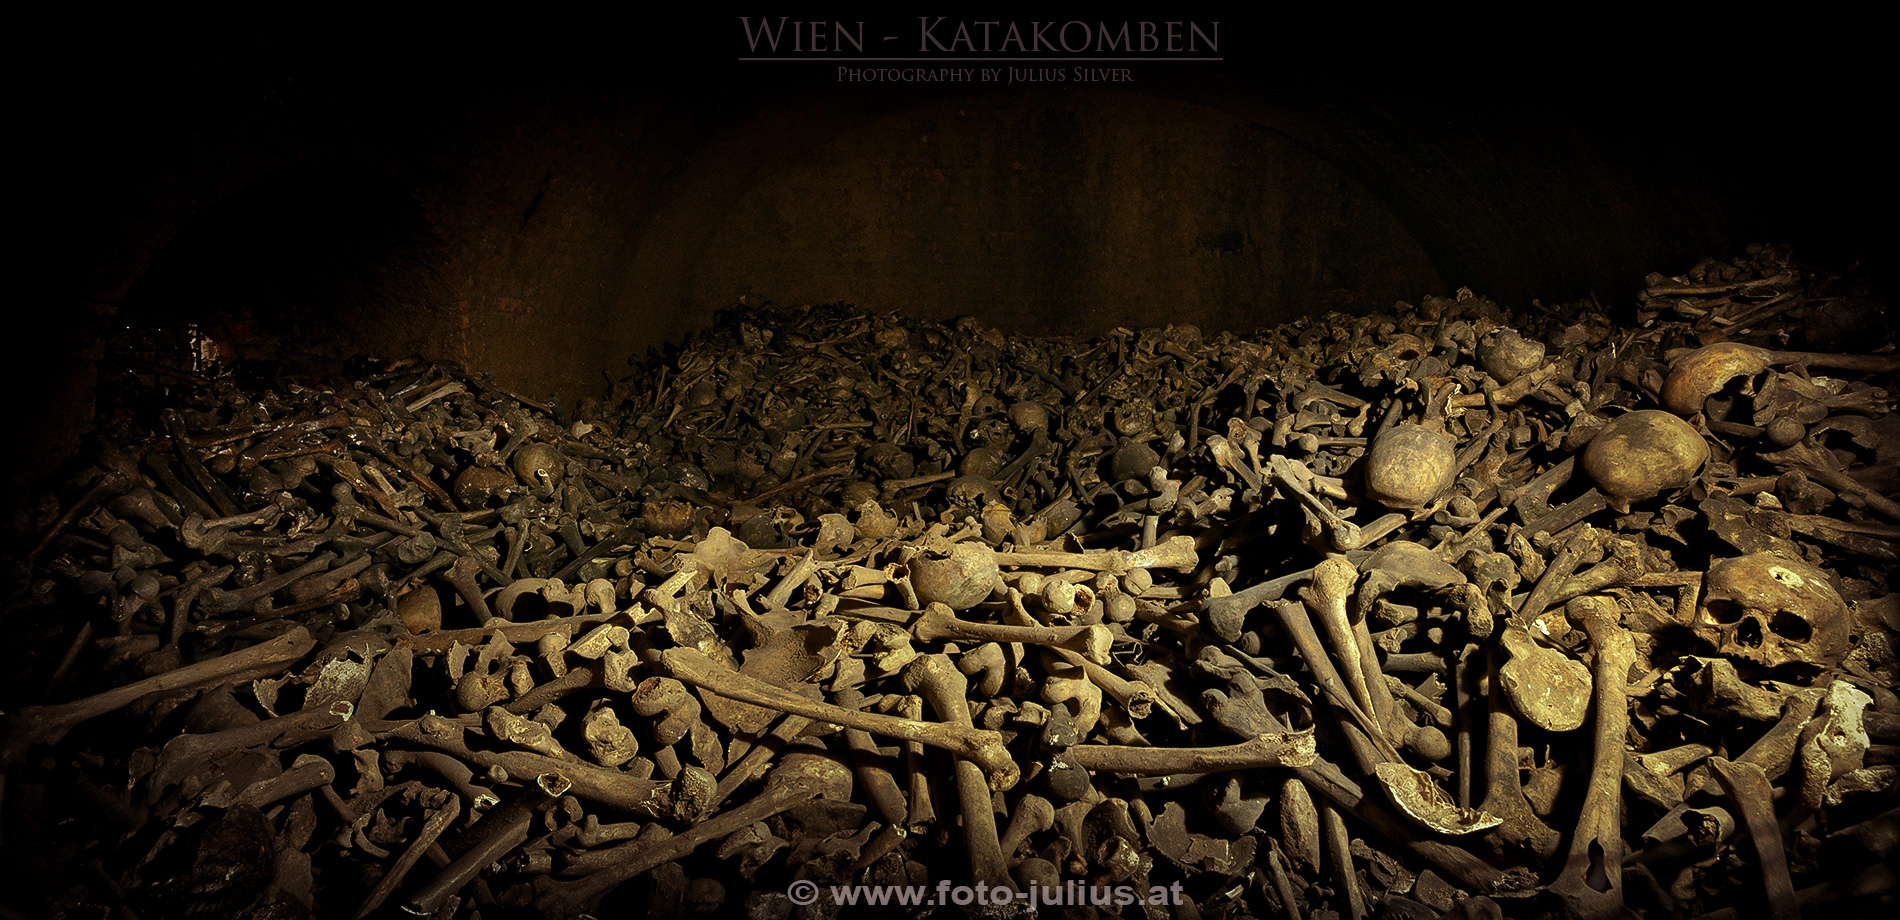 W5780a_Vienna_Catacombs.jpg, 777kB